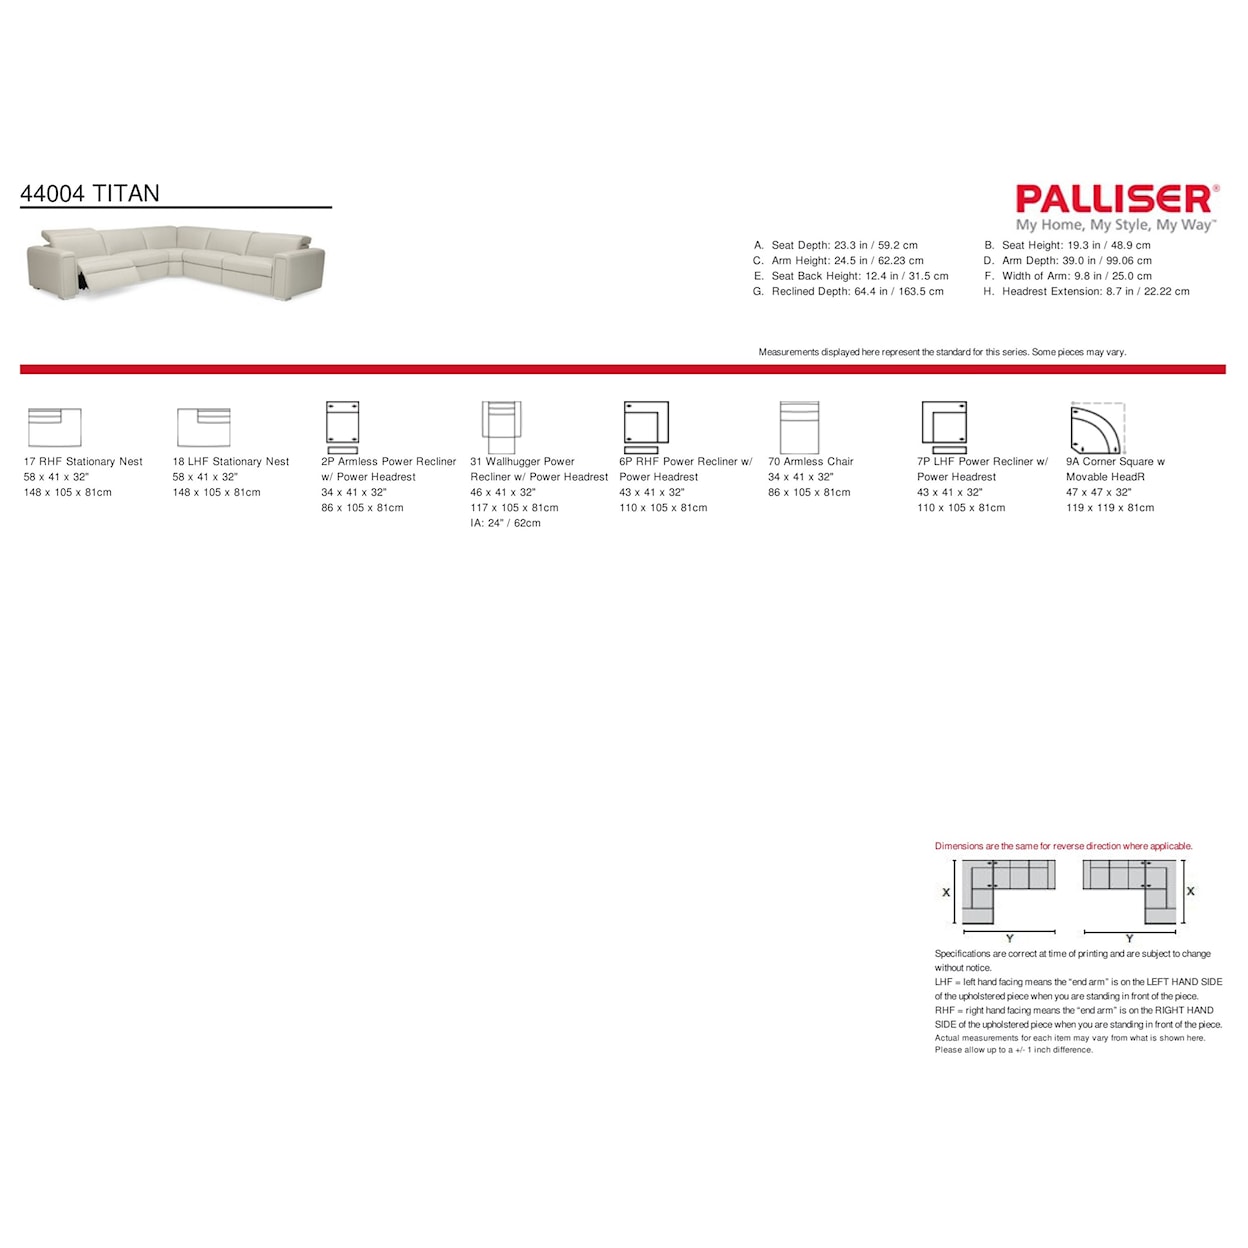 Palliser Titan 4-Seat Pwr Reclining Sectional Sofa